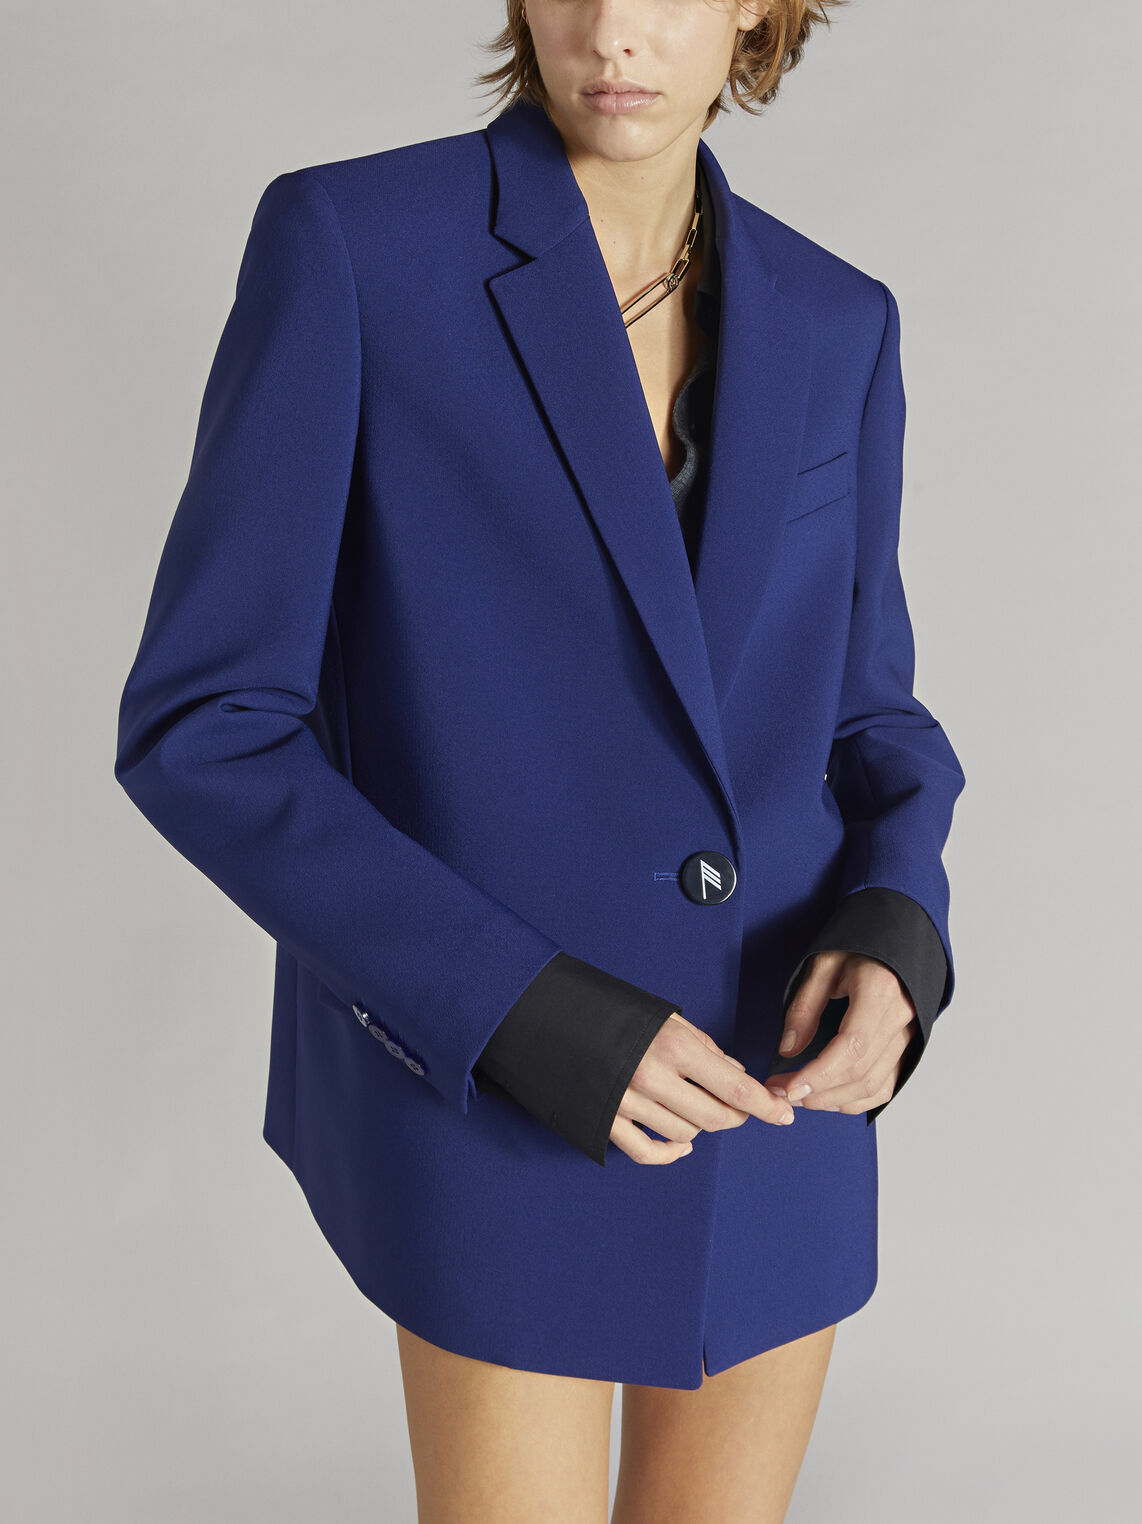 THE ATTICO "Bianca" blue navy blazer jacket 2